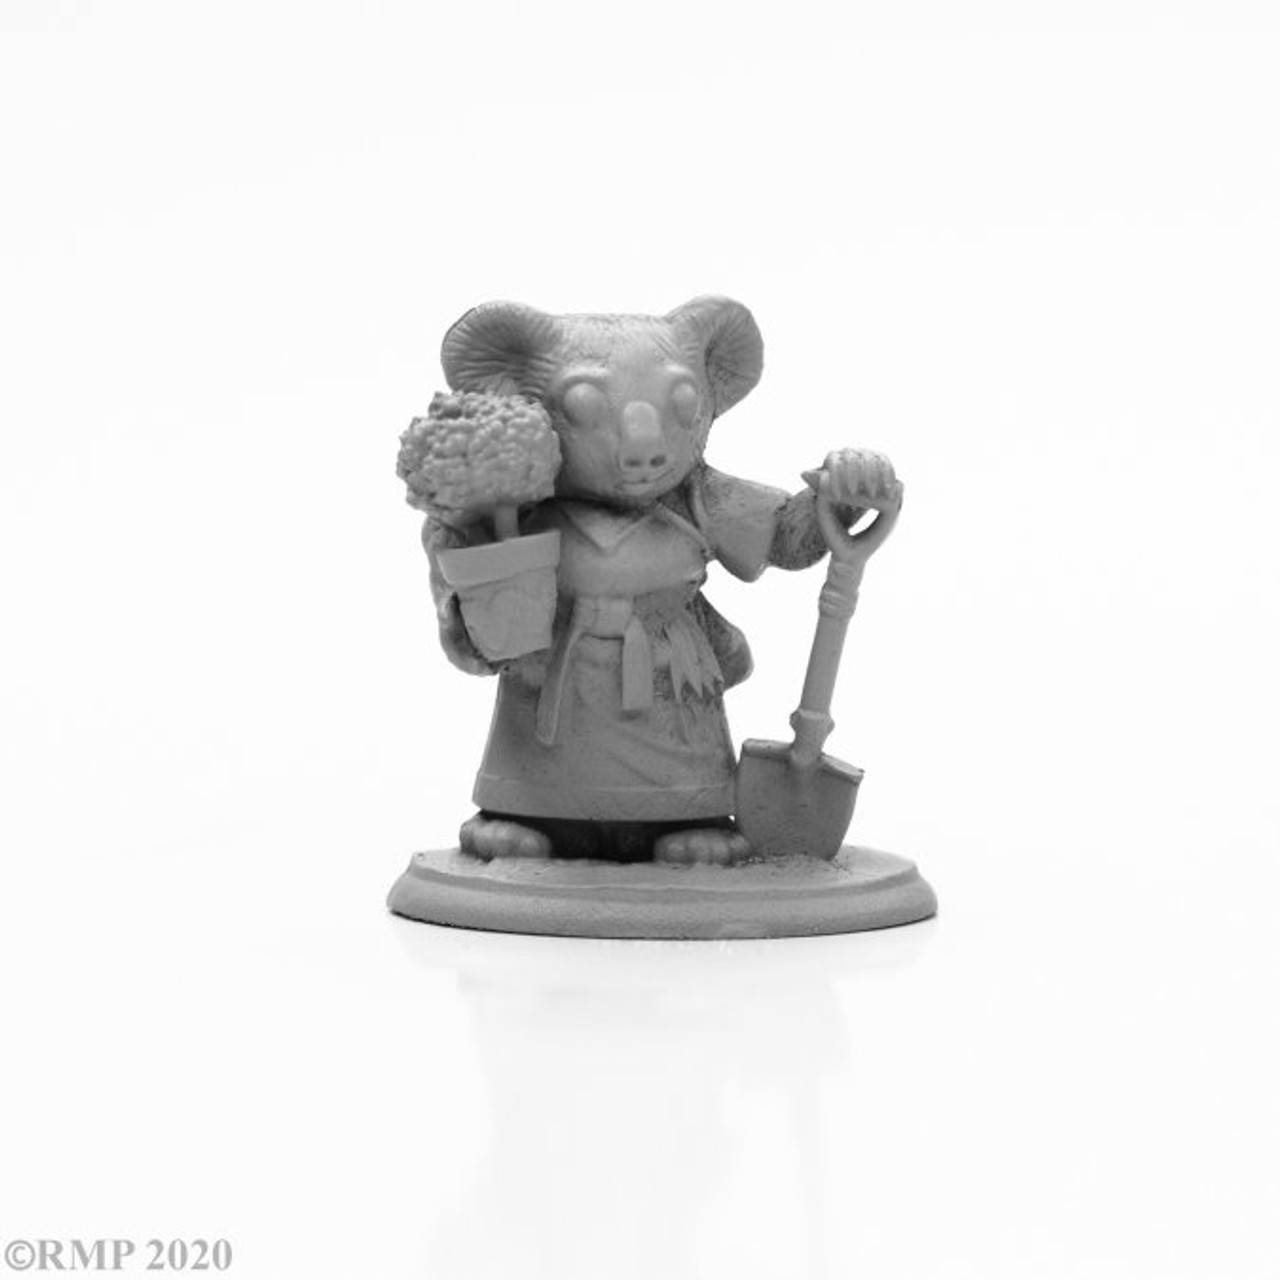 01648 - Special Edition Figures: Hope the Koala Druid, 2020 Australian Brushfire Relief Miniature